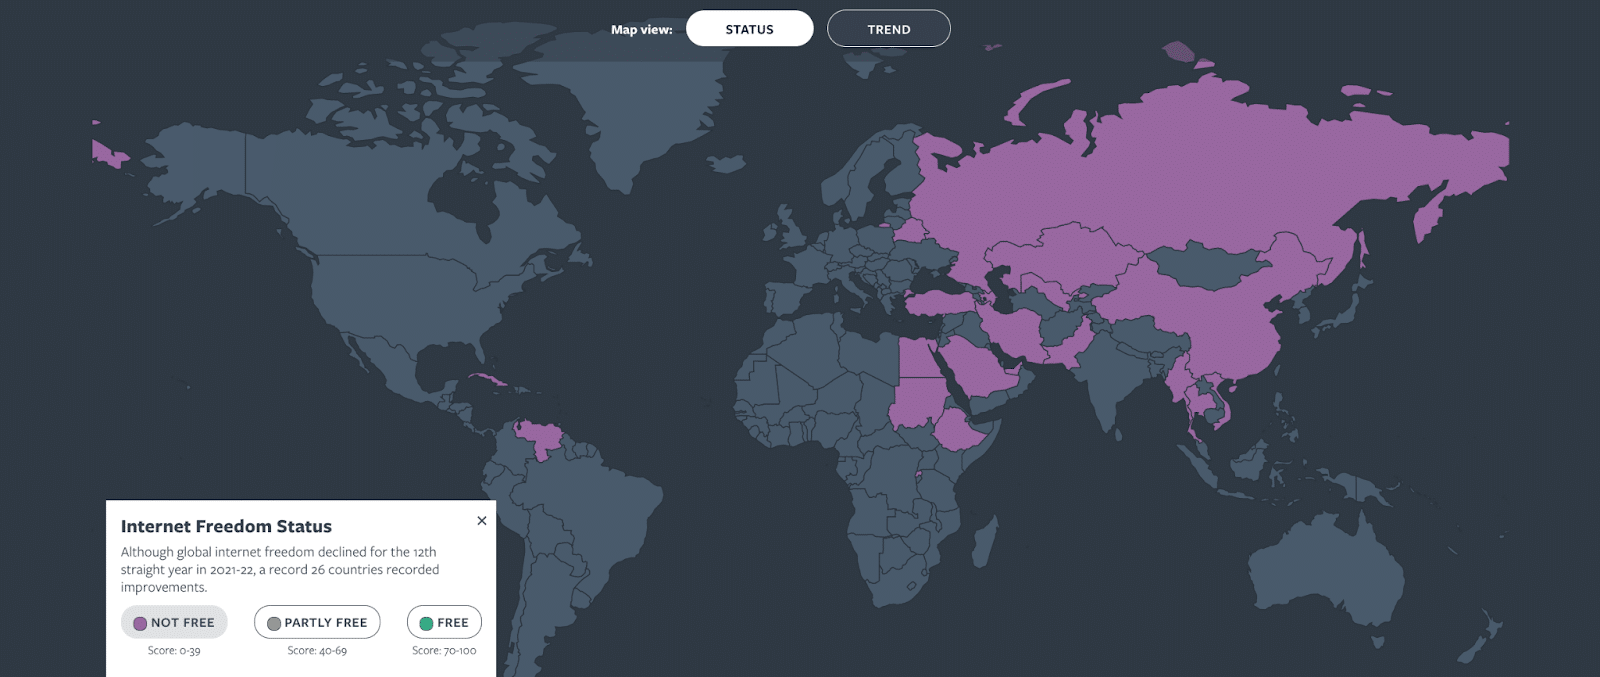 Internet freedom status worldwide